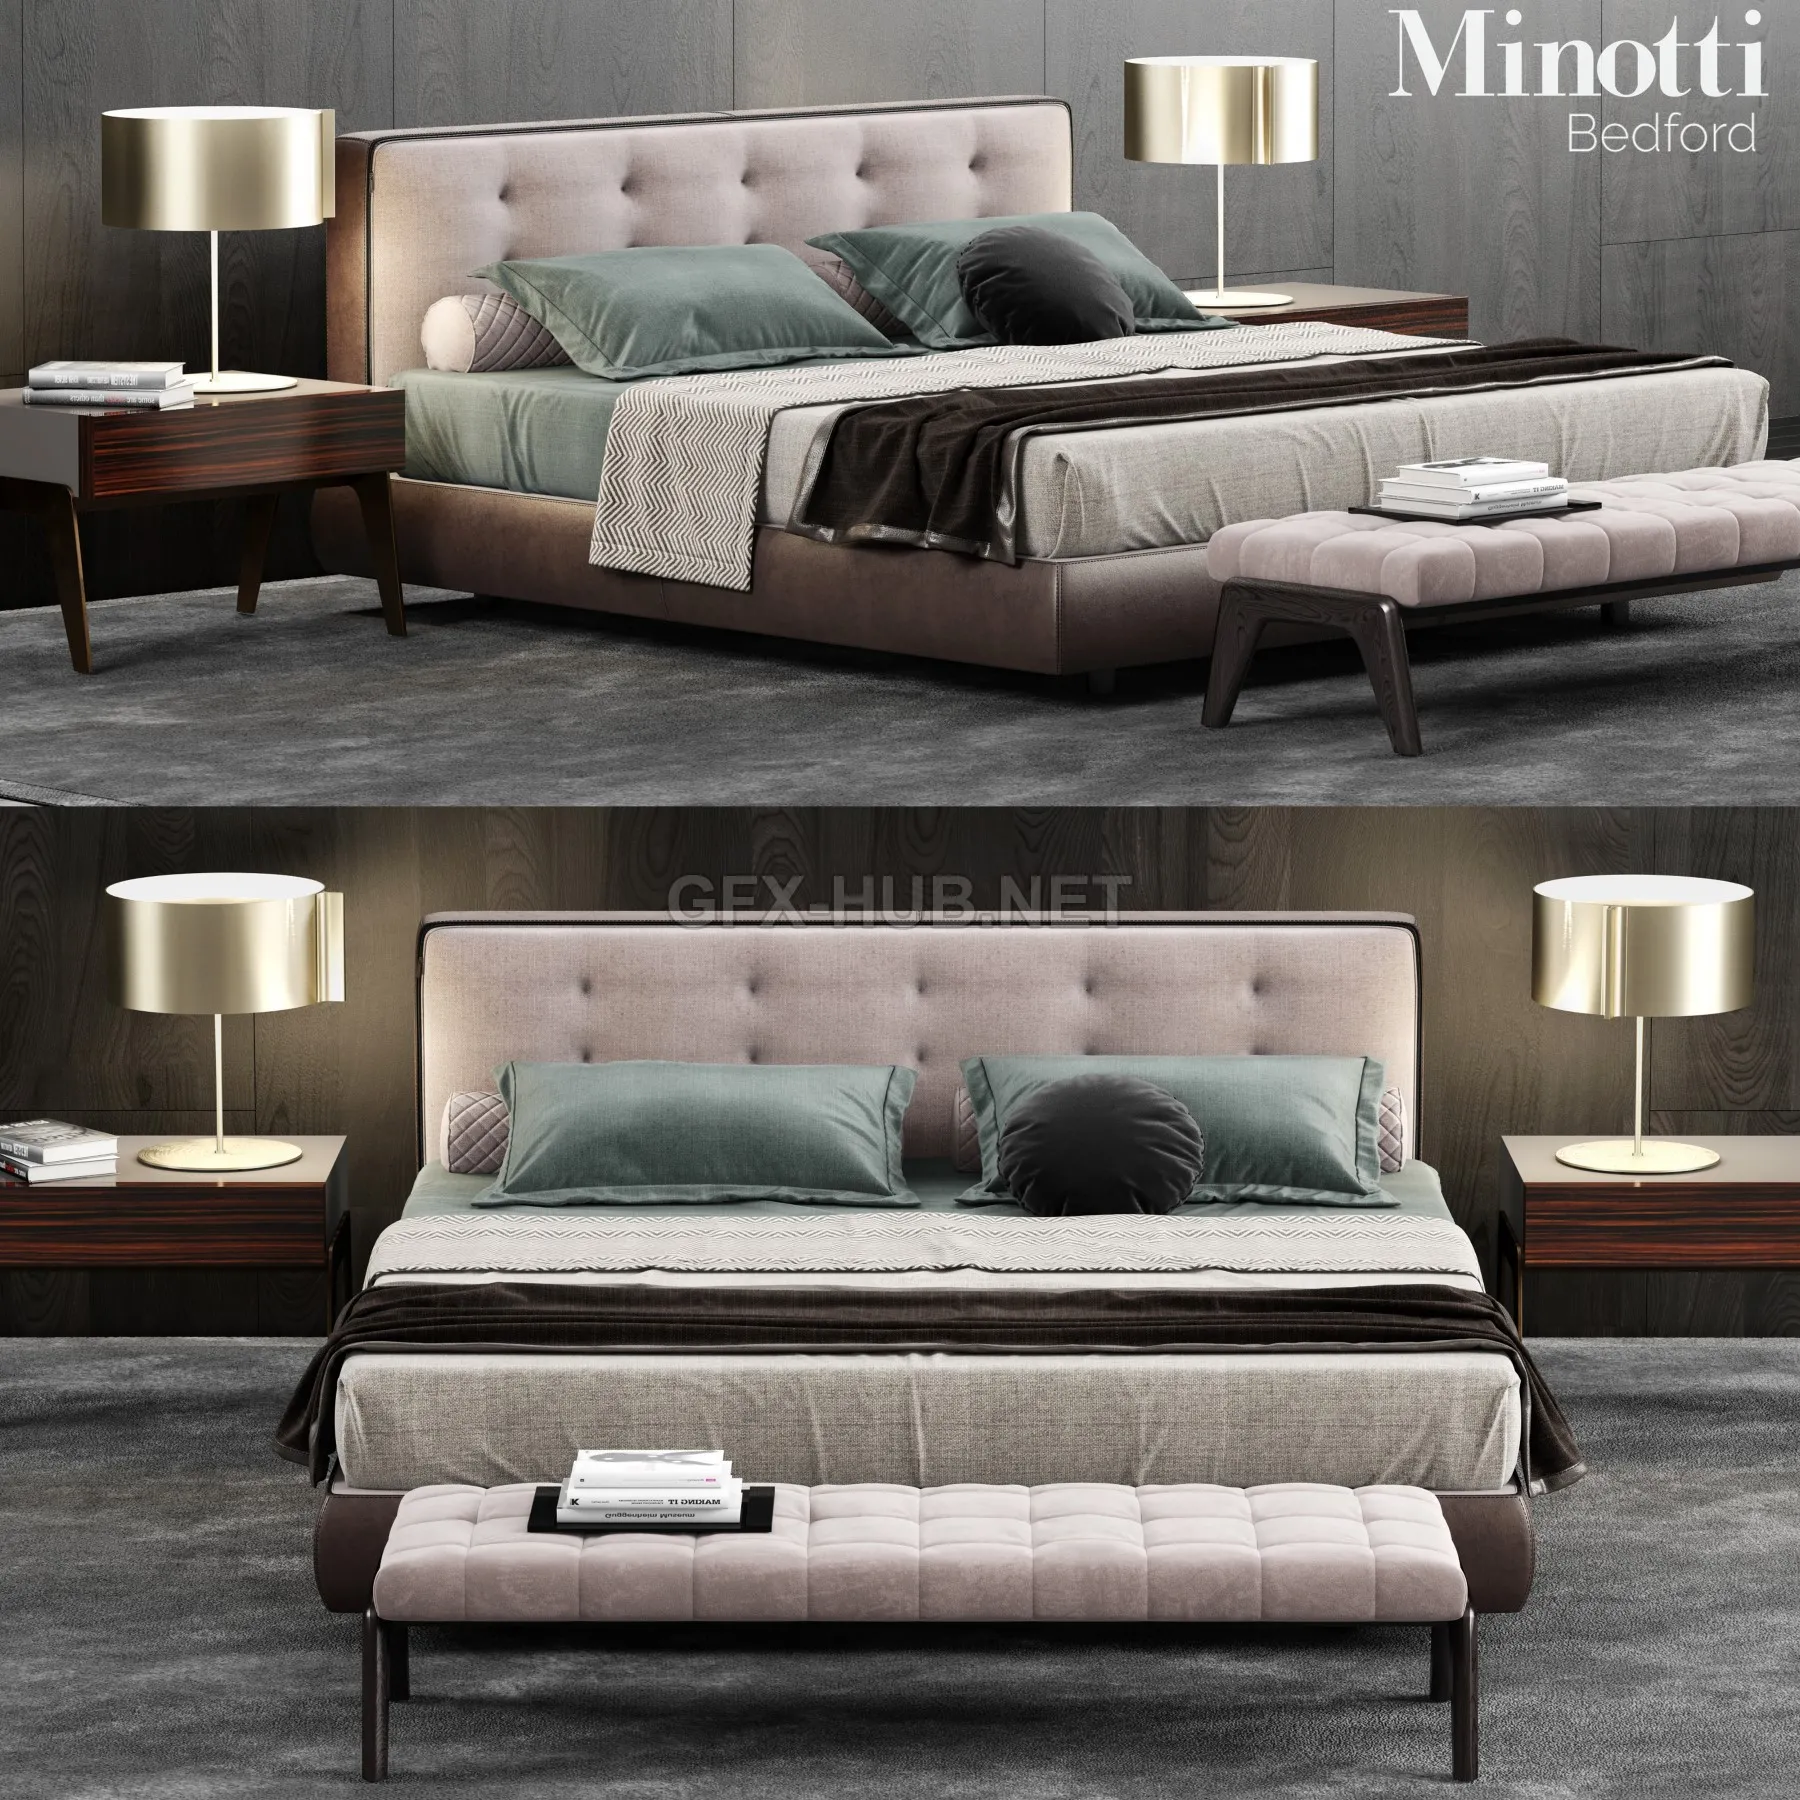 FURNITURE 3D MODELS – Minotti Bedford Bed